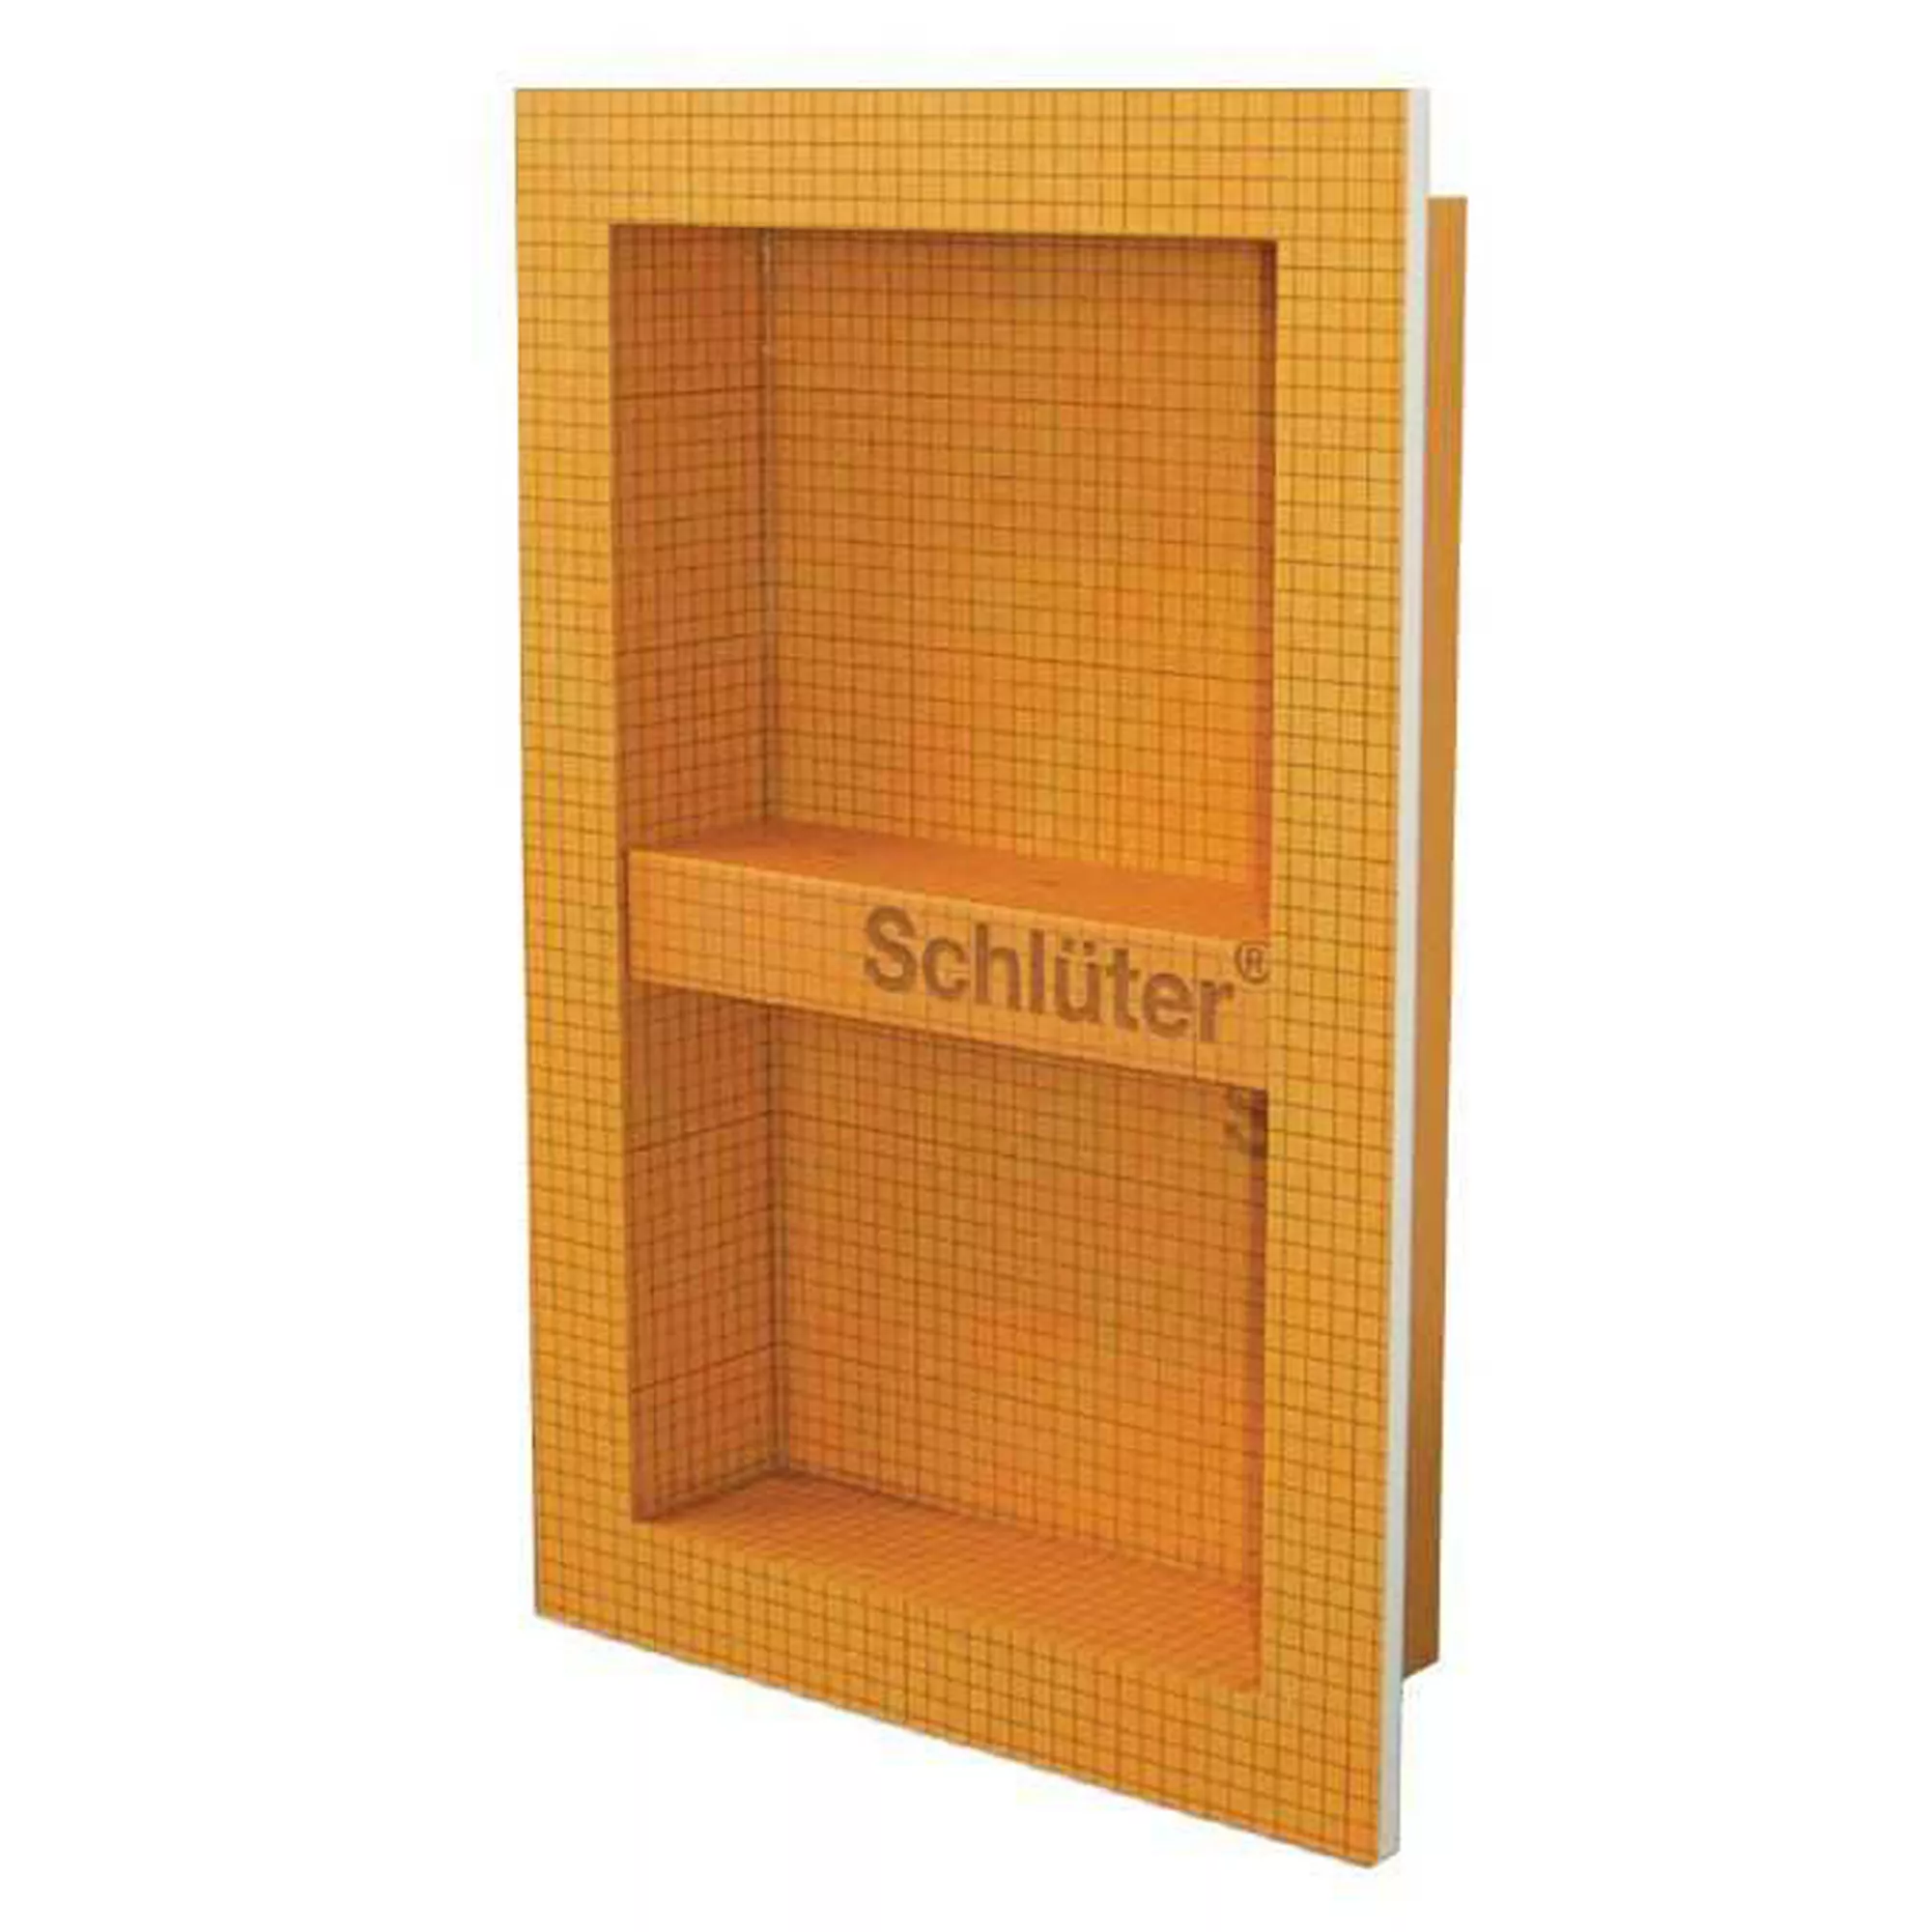 Schlüter Kerdi Board N - Zona de depozitare de nișă (305x508x89mm)